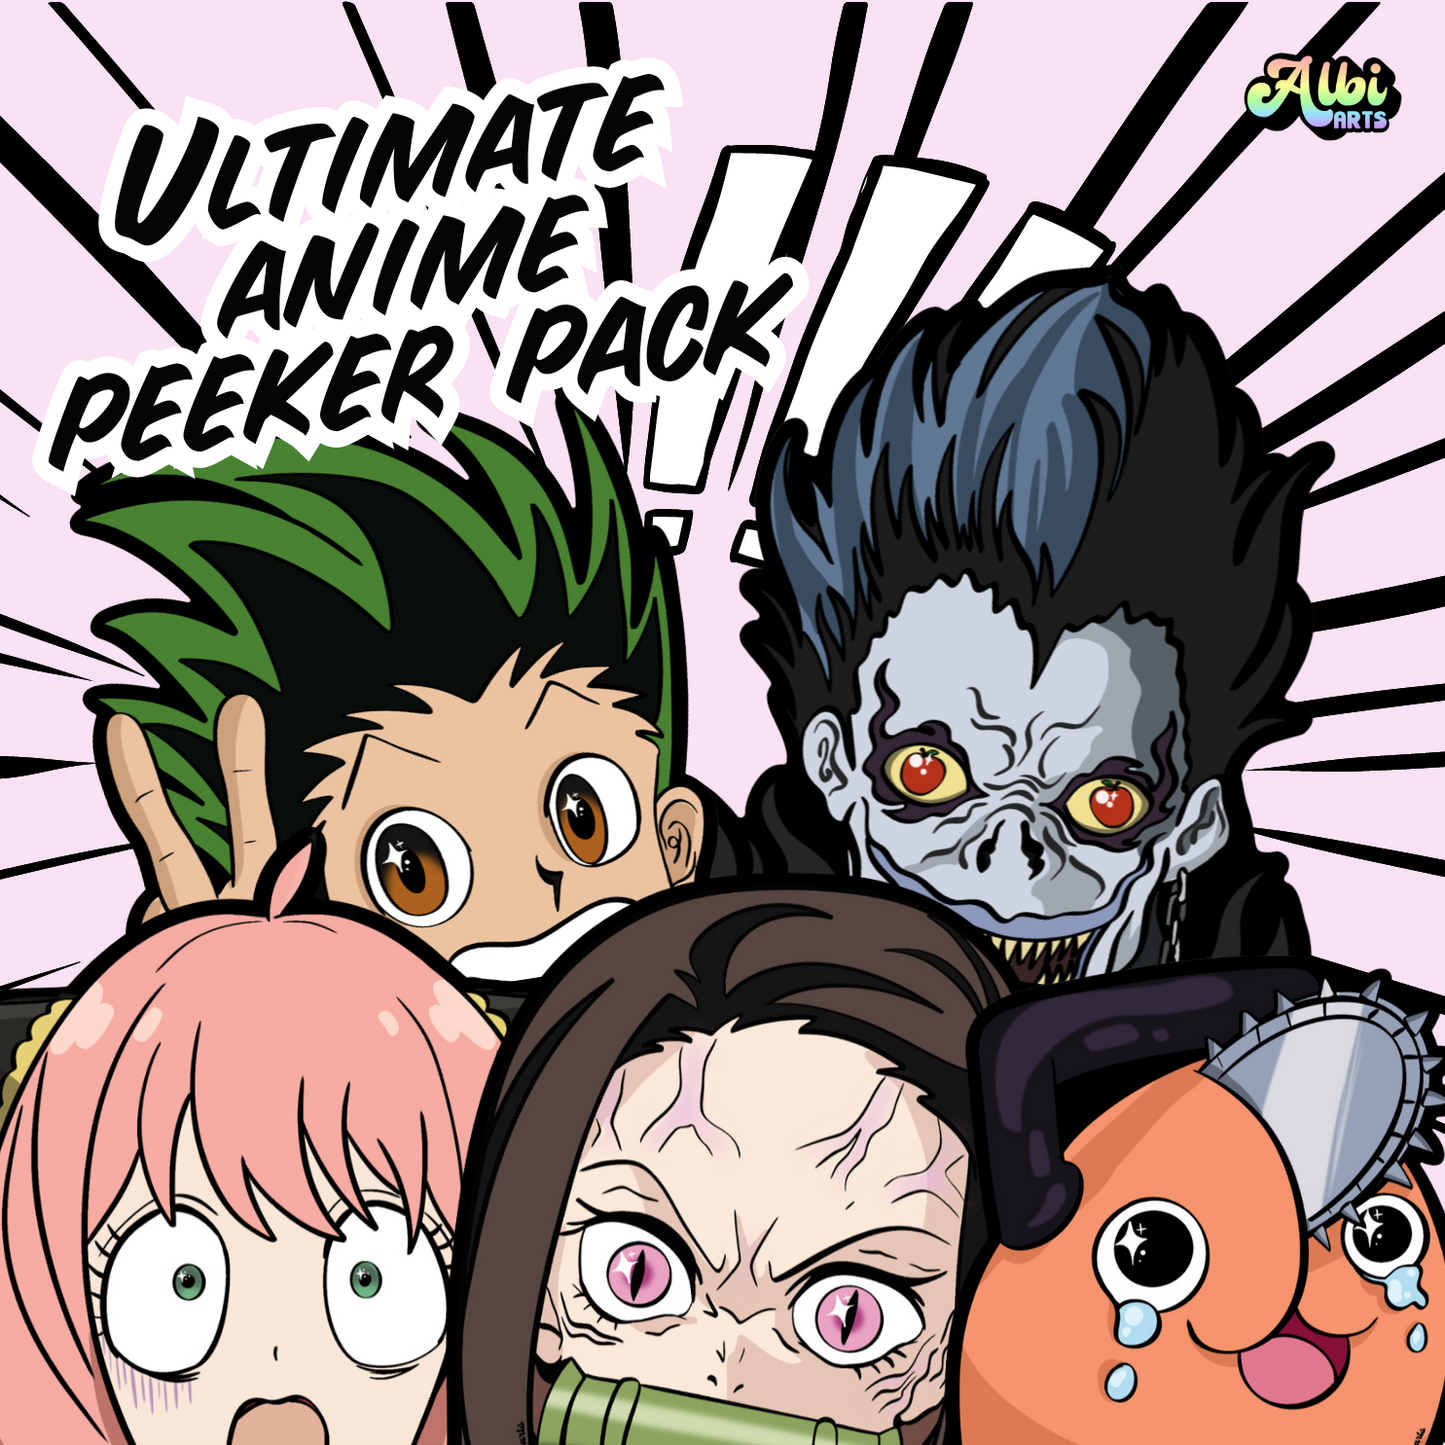 Ultimate Anime Peeker Pack